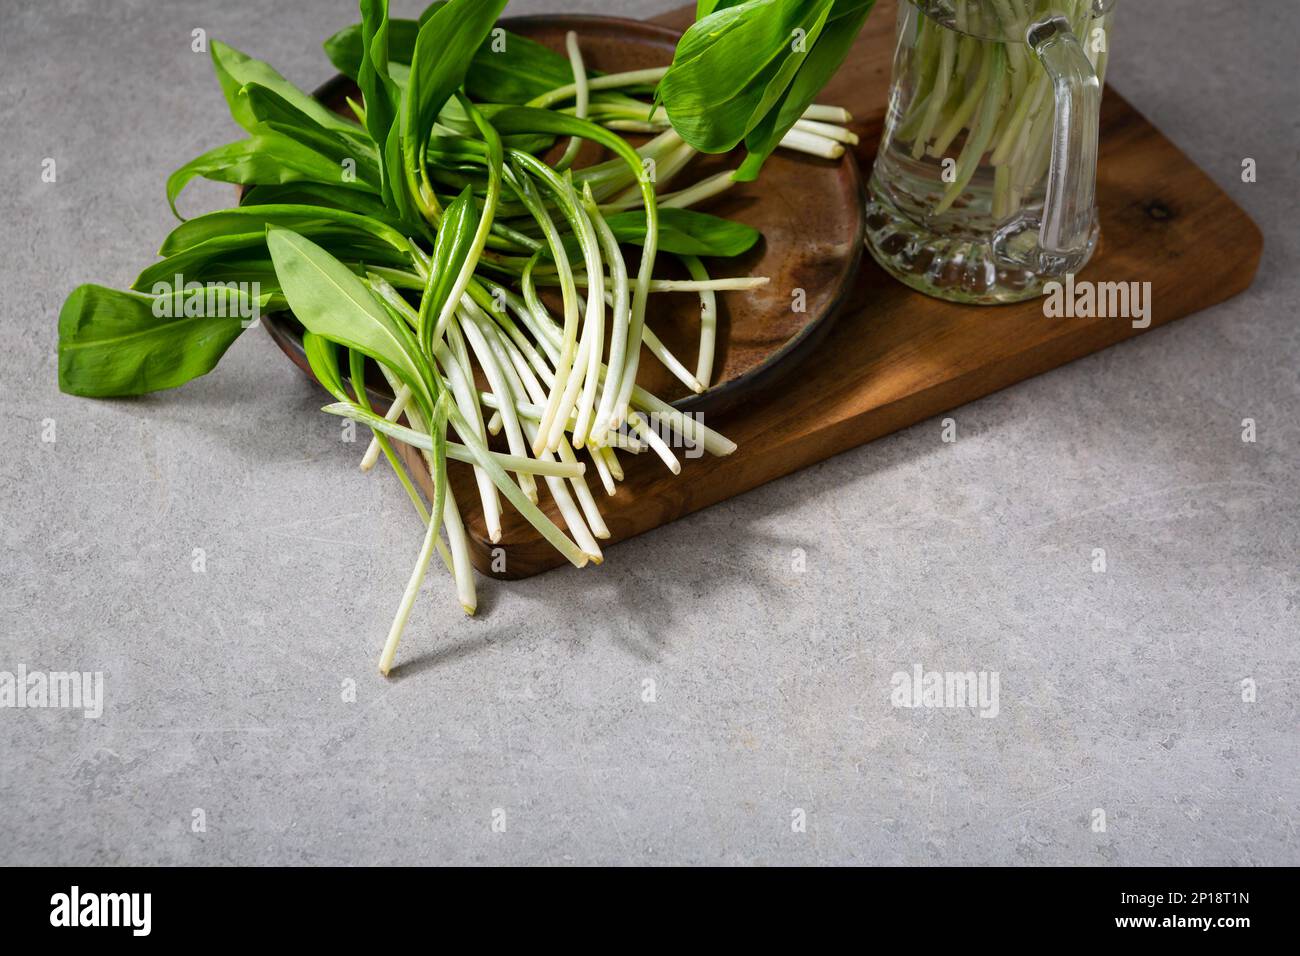 Spring organic food wild ramson leek on plate Stock Photo